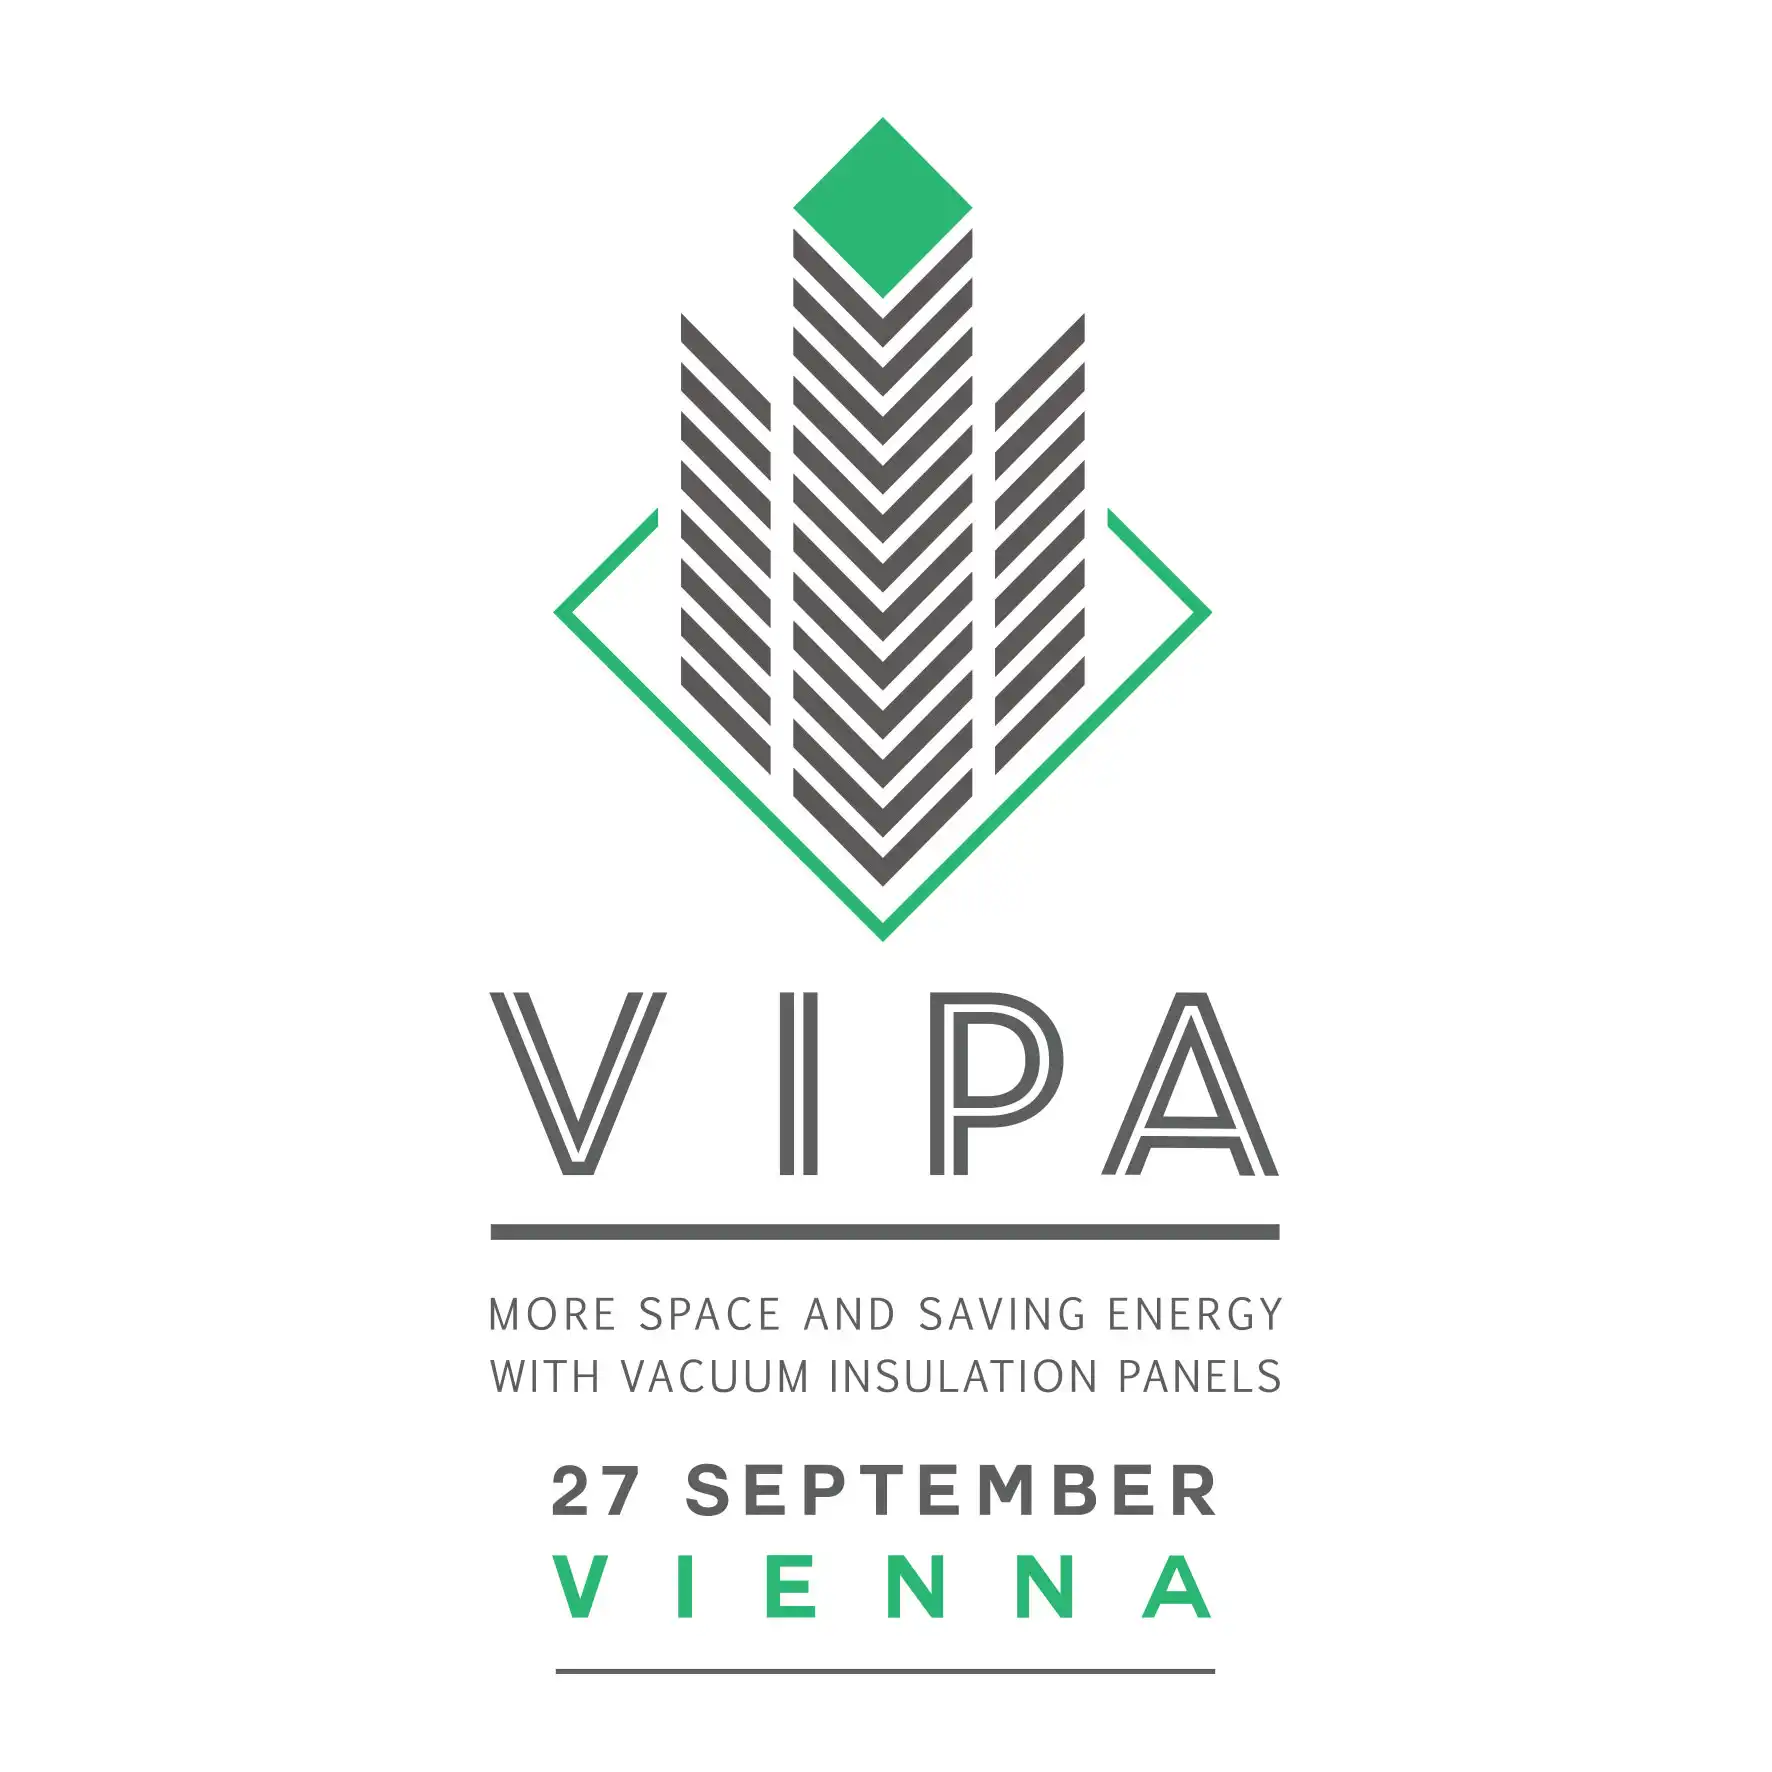 VIPA (The Vacuum Insulation Panel Association) – Event logo